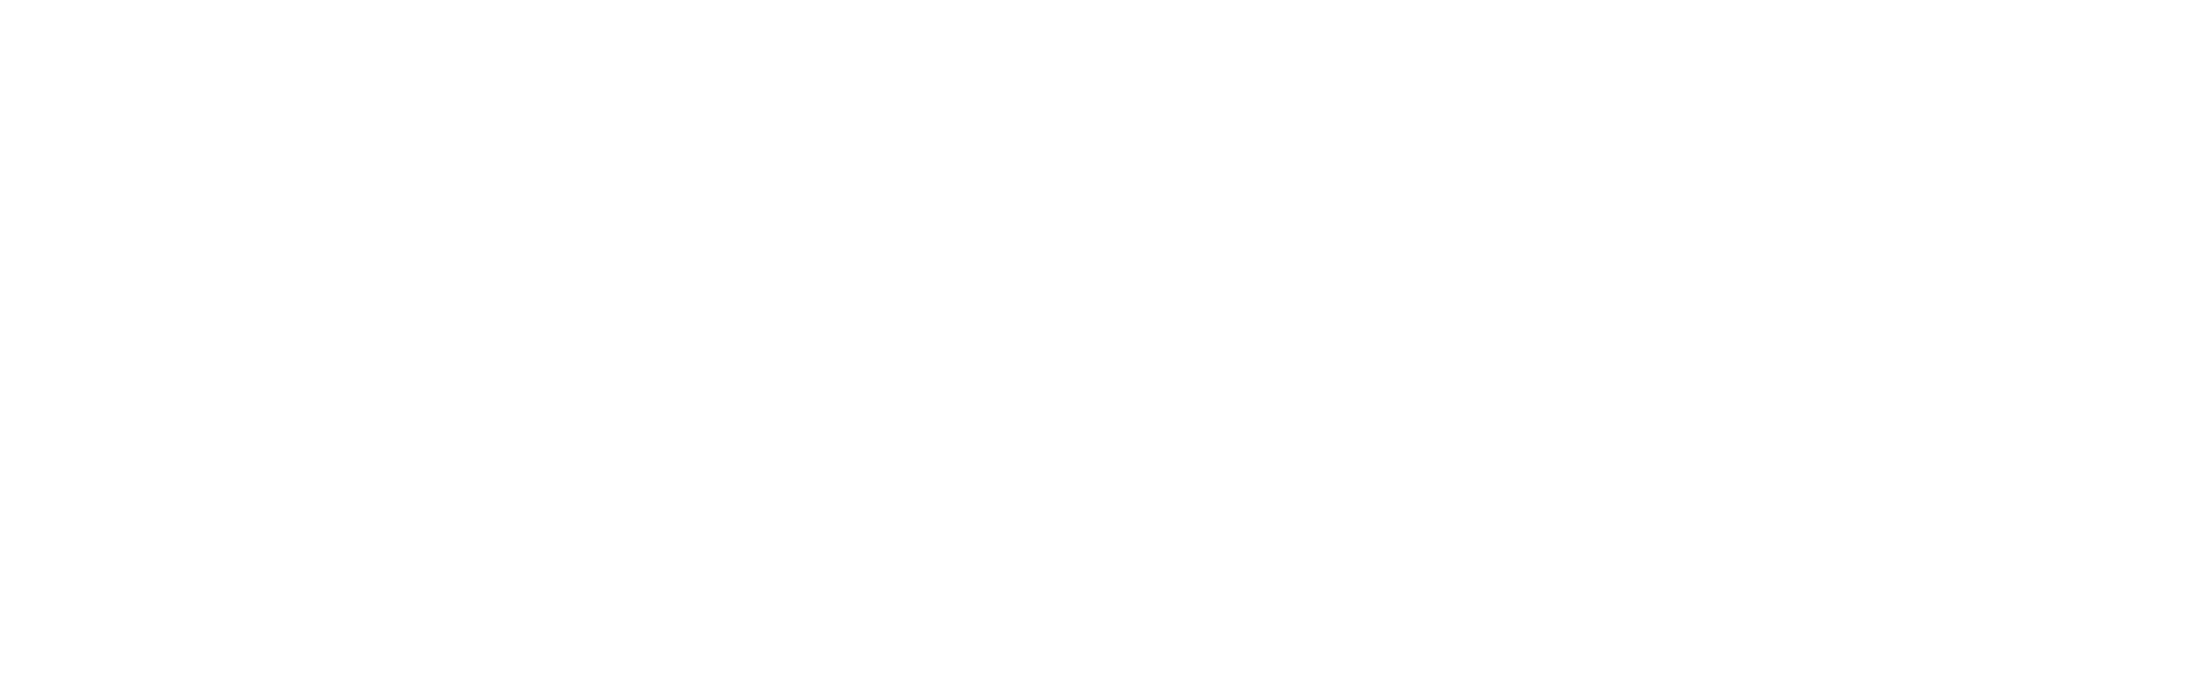 netflix-logo-0.png